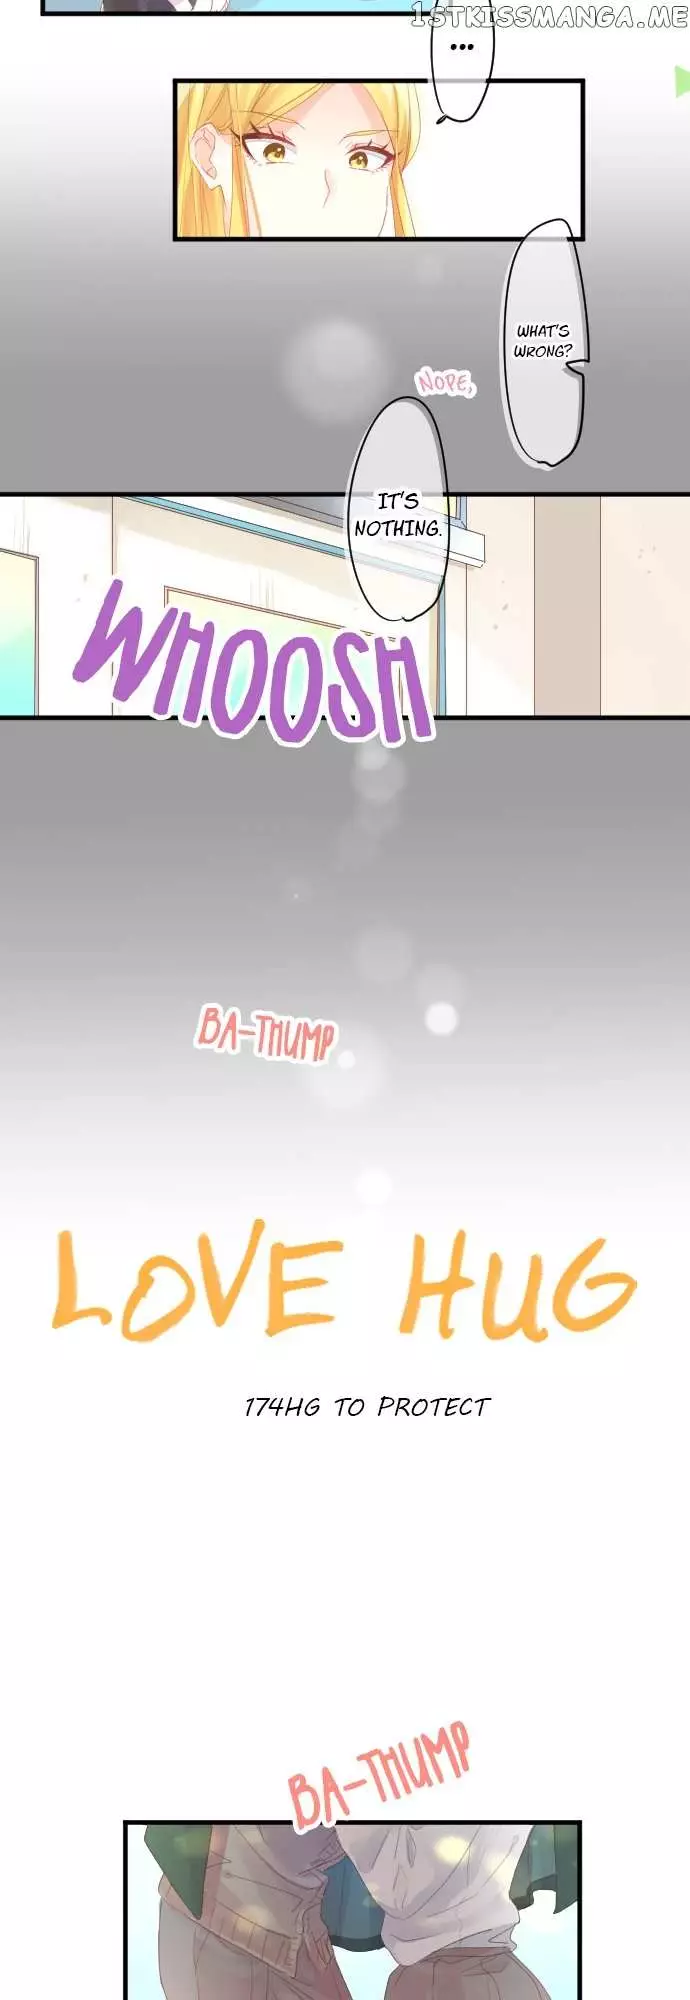 Love Hug - 174 page 5-90f5ff40